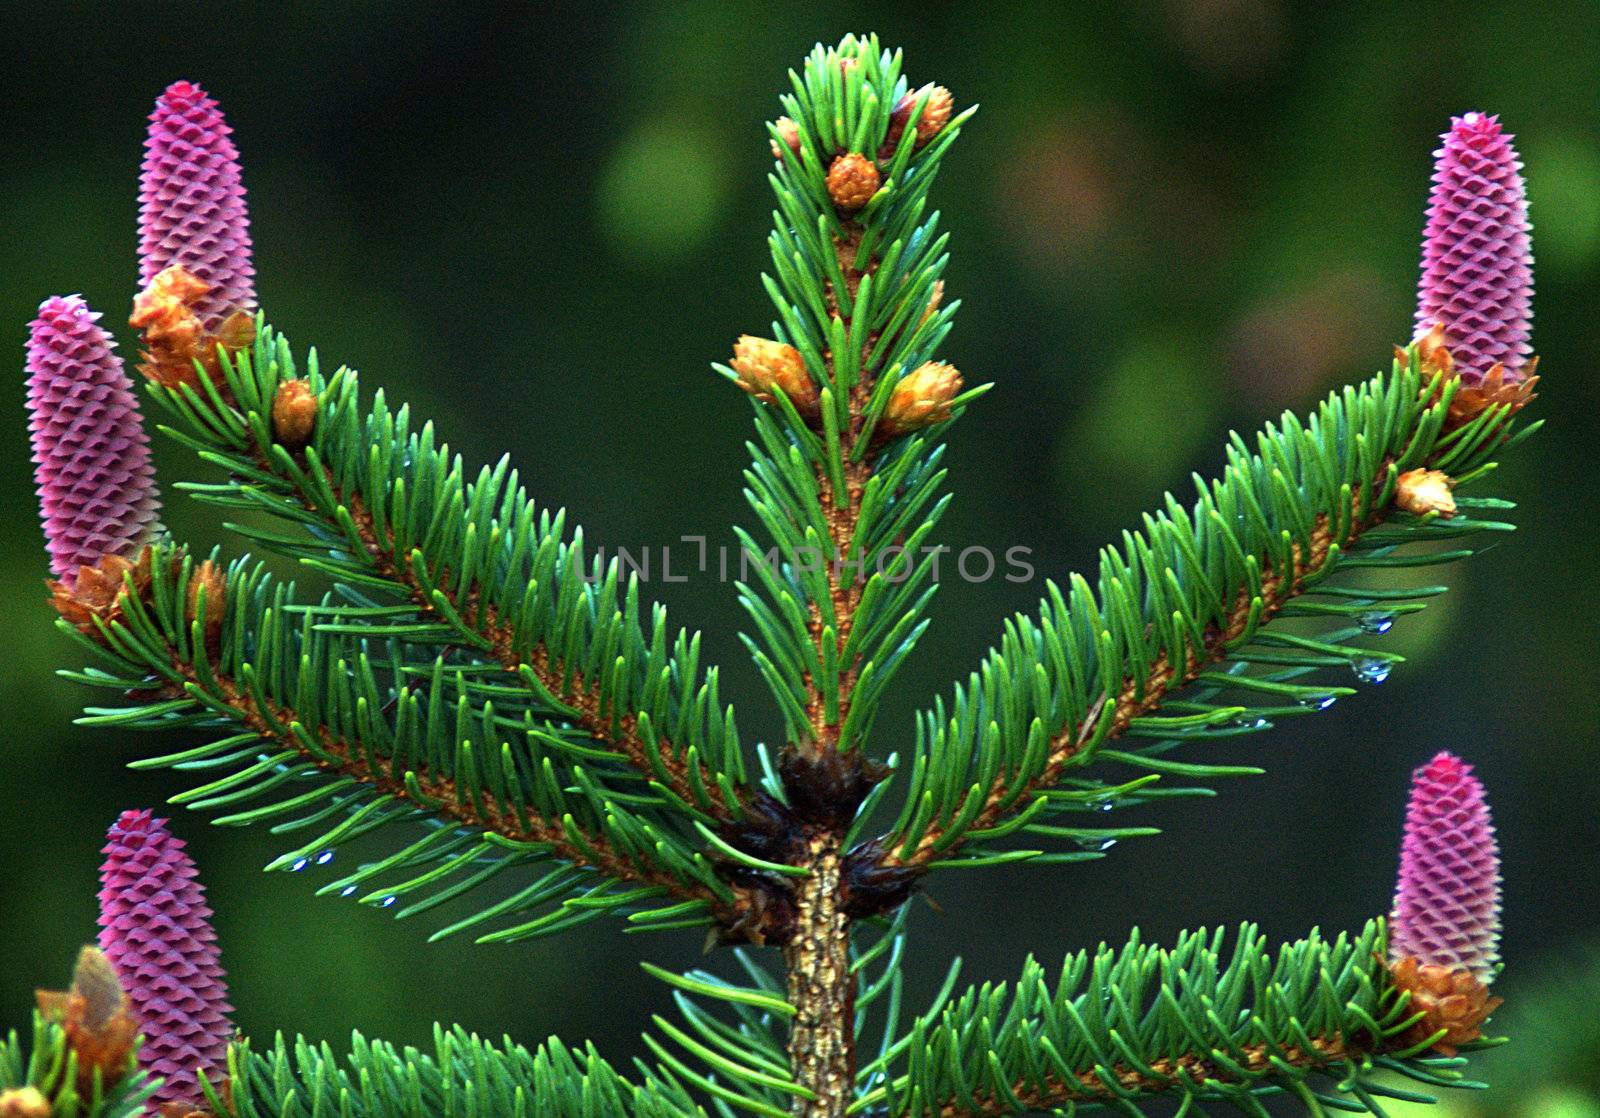 Spruce cones by sundaune